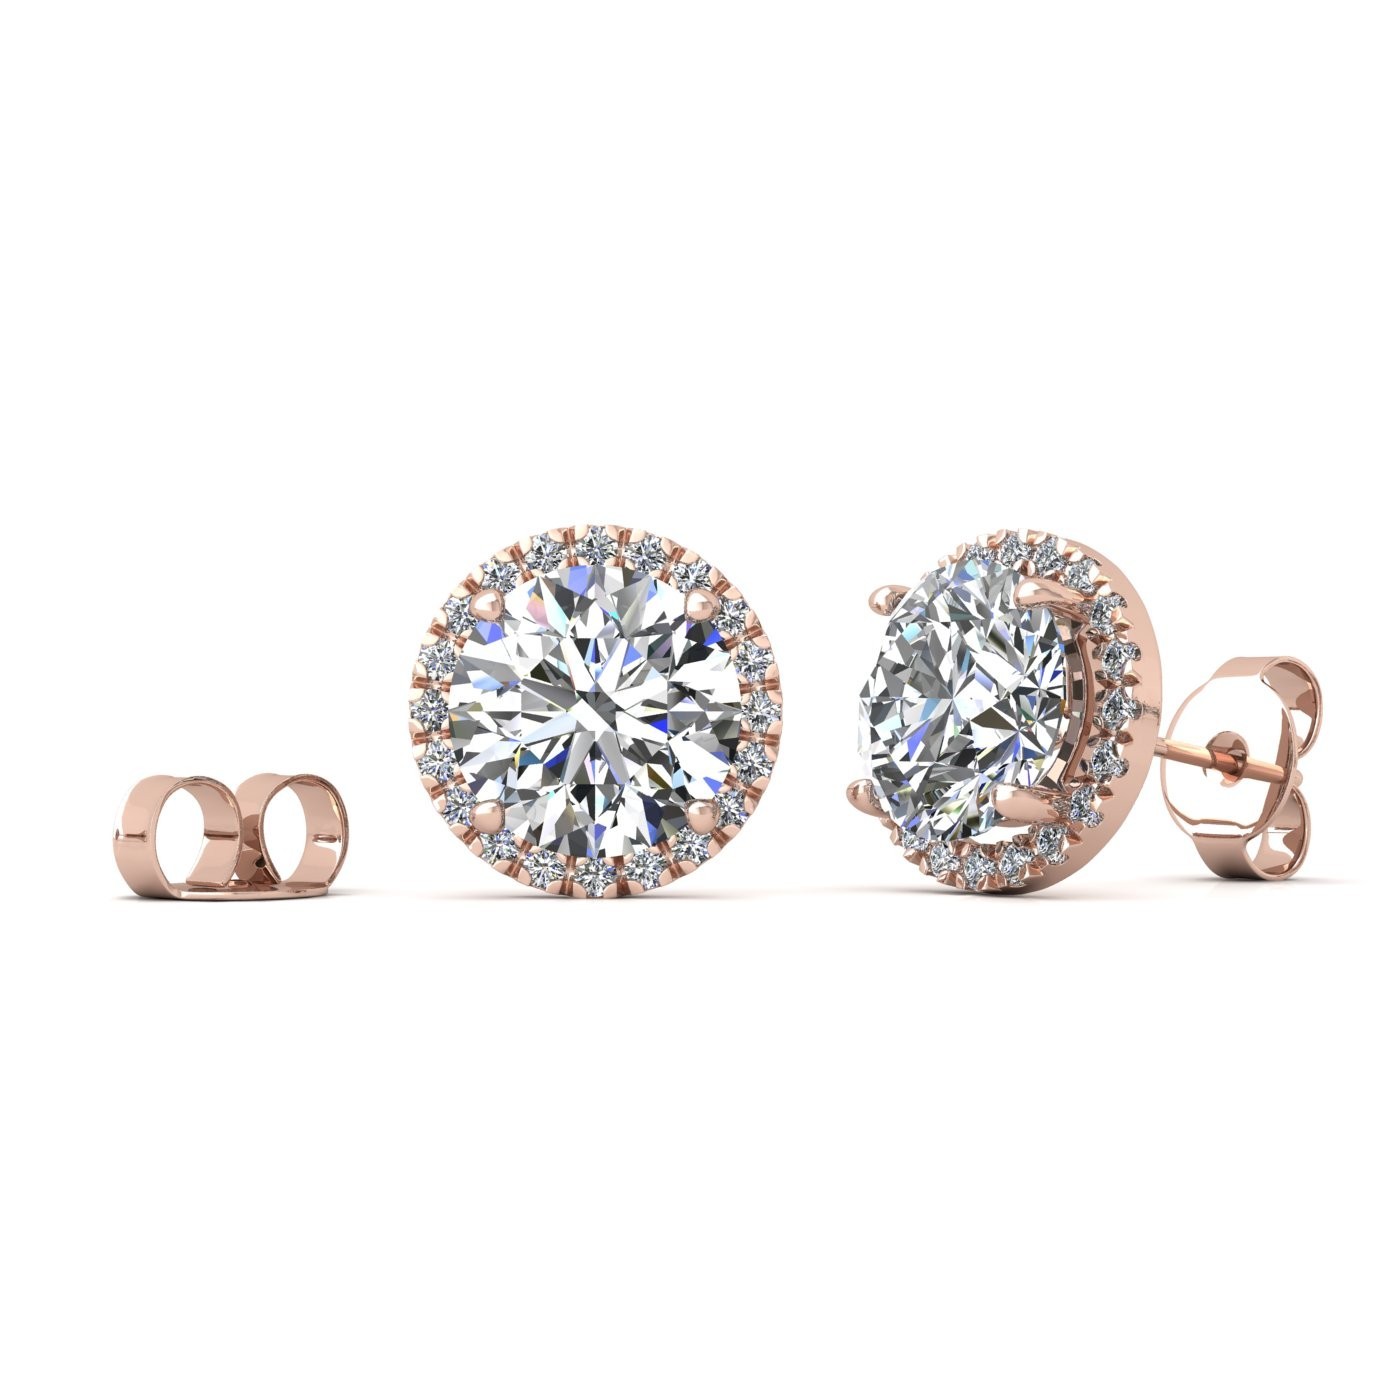 18k rose gold  1 ct each (2,0 tcw) 4 prongs round shape diamond earrings with diamond pavÉ set halo